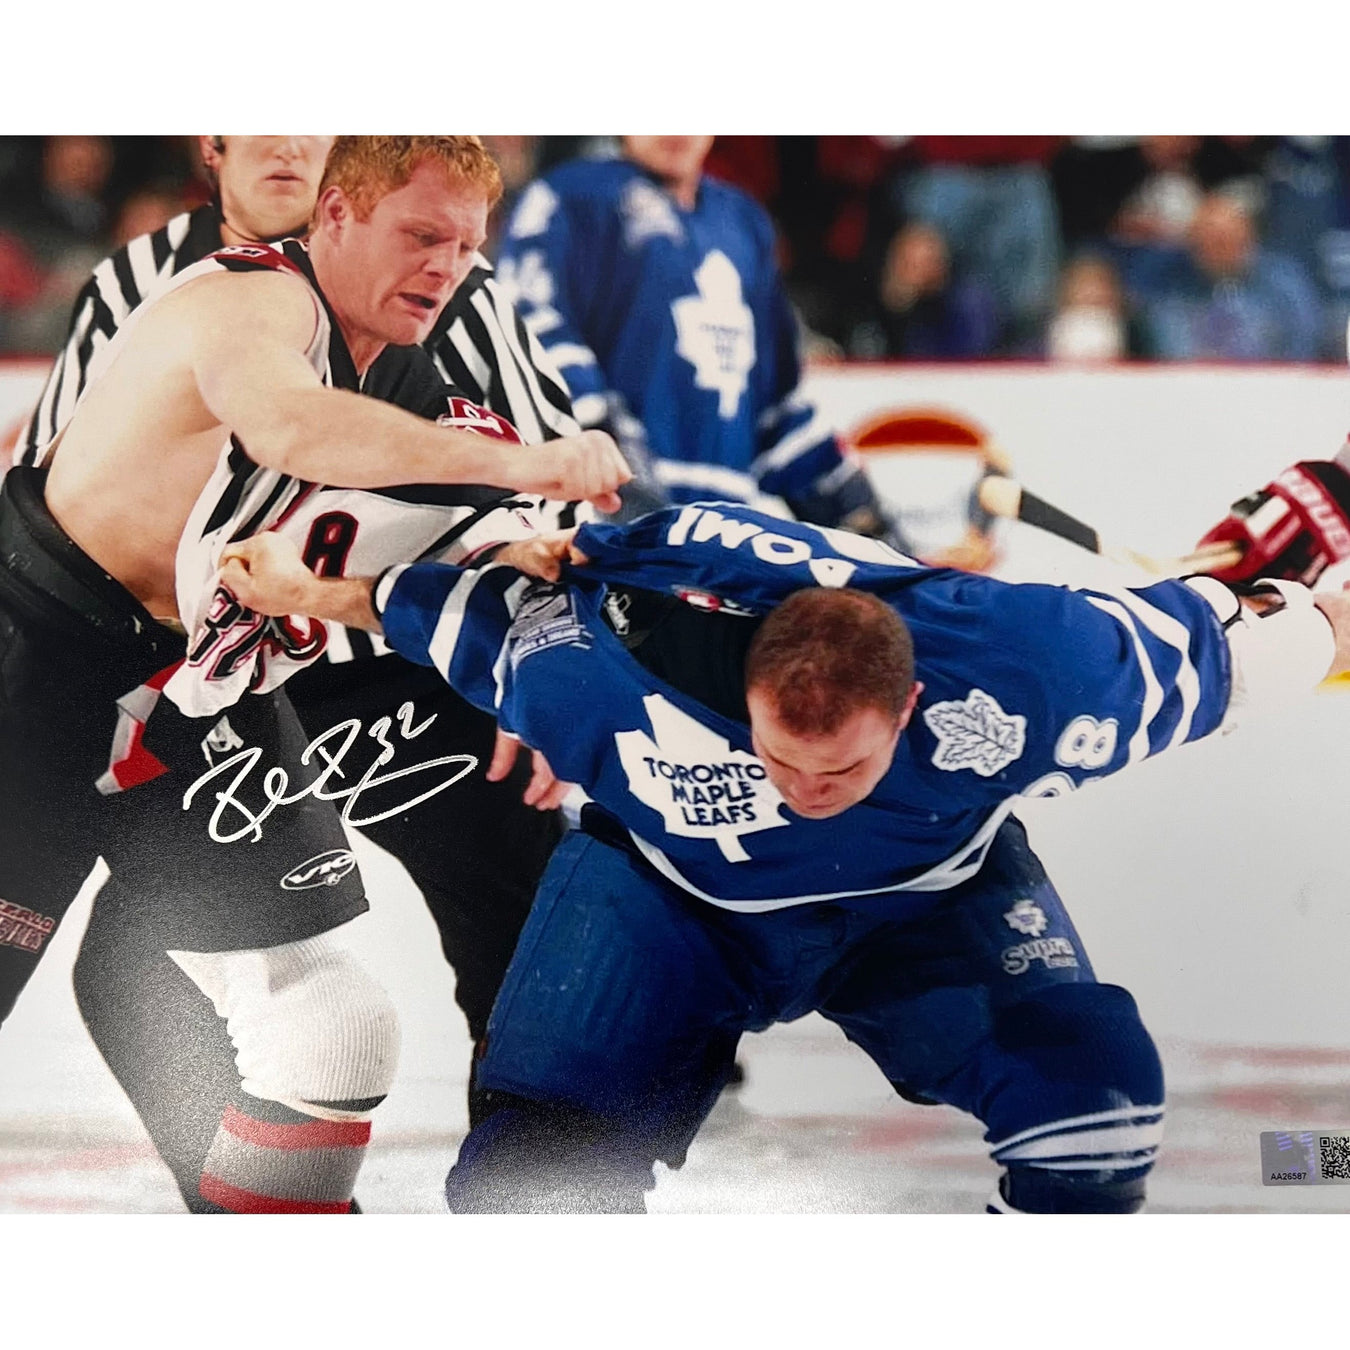 Signed Hockey Photos